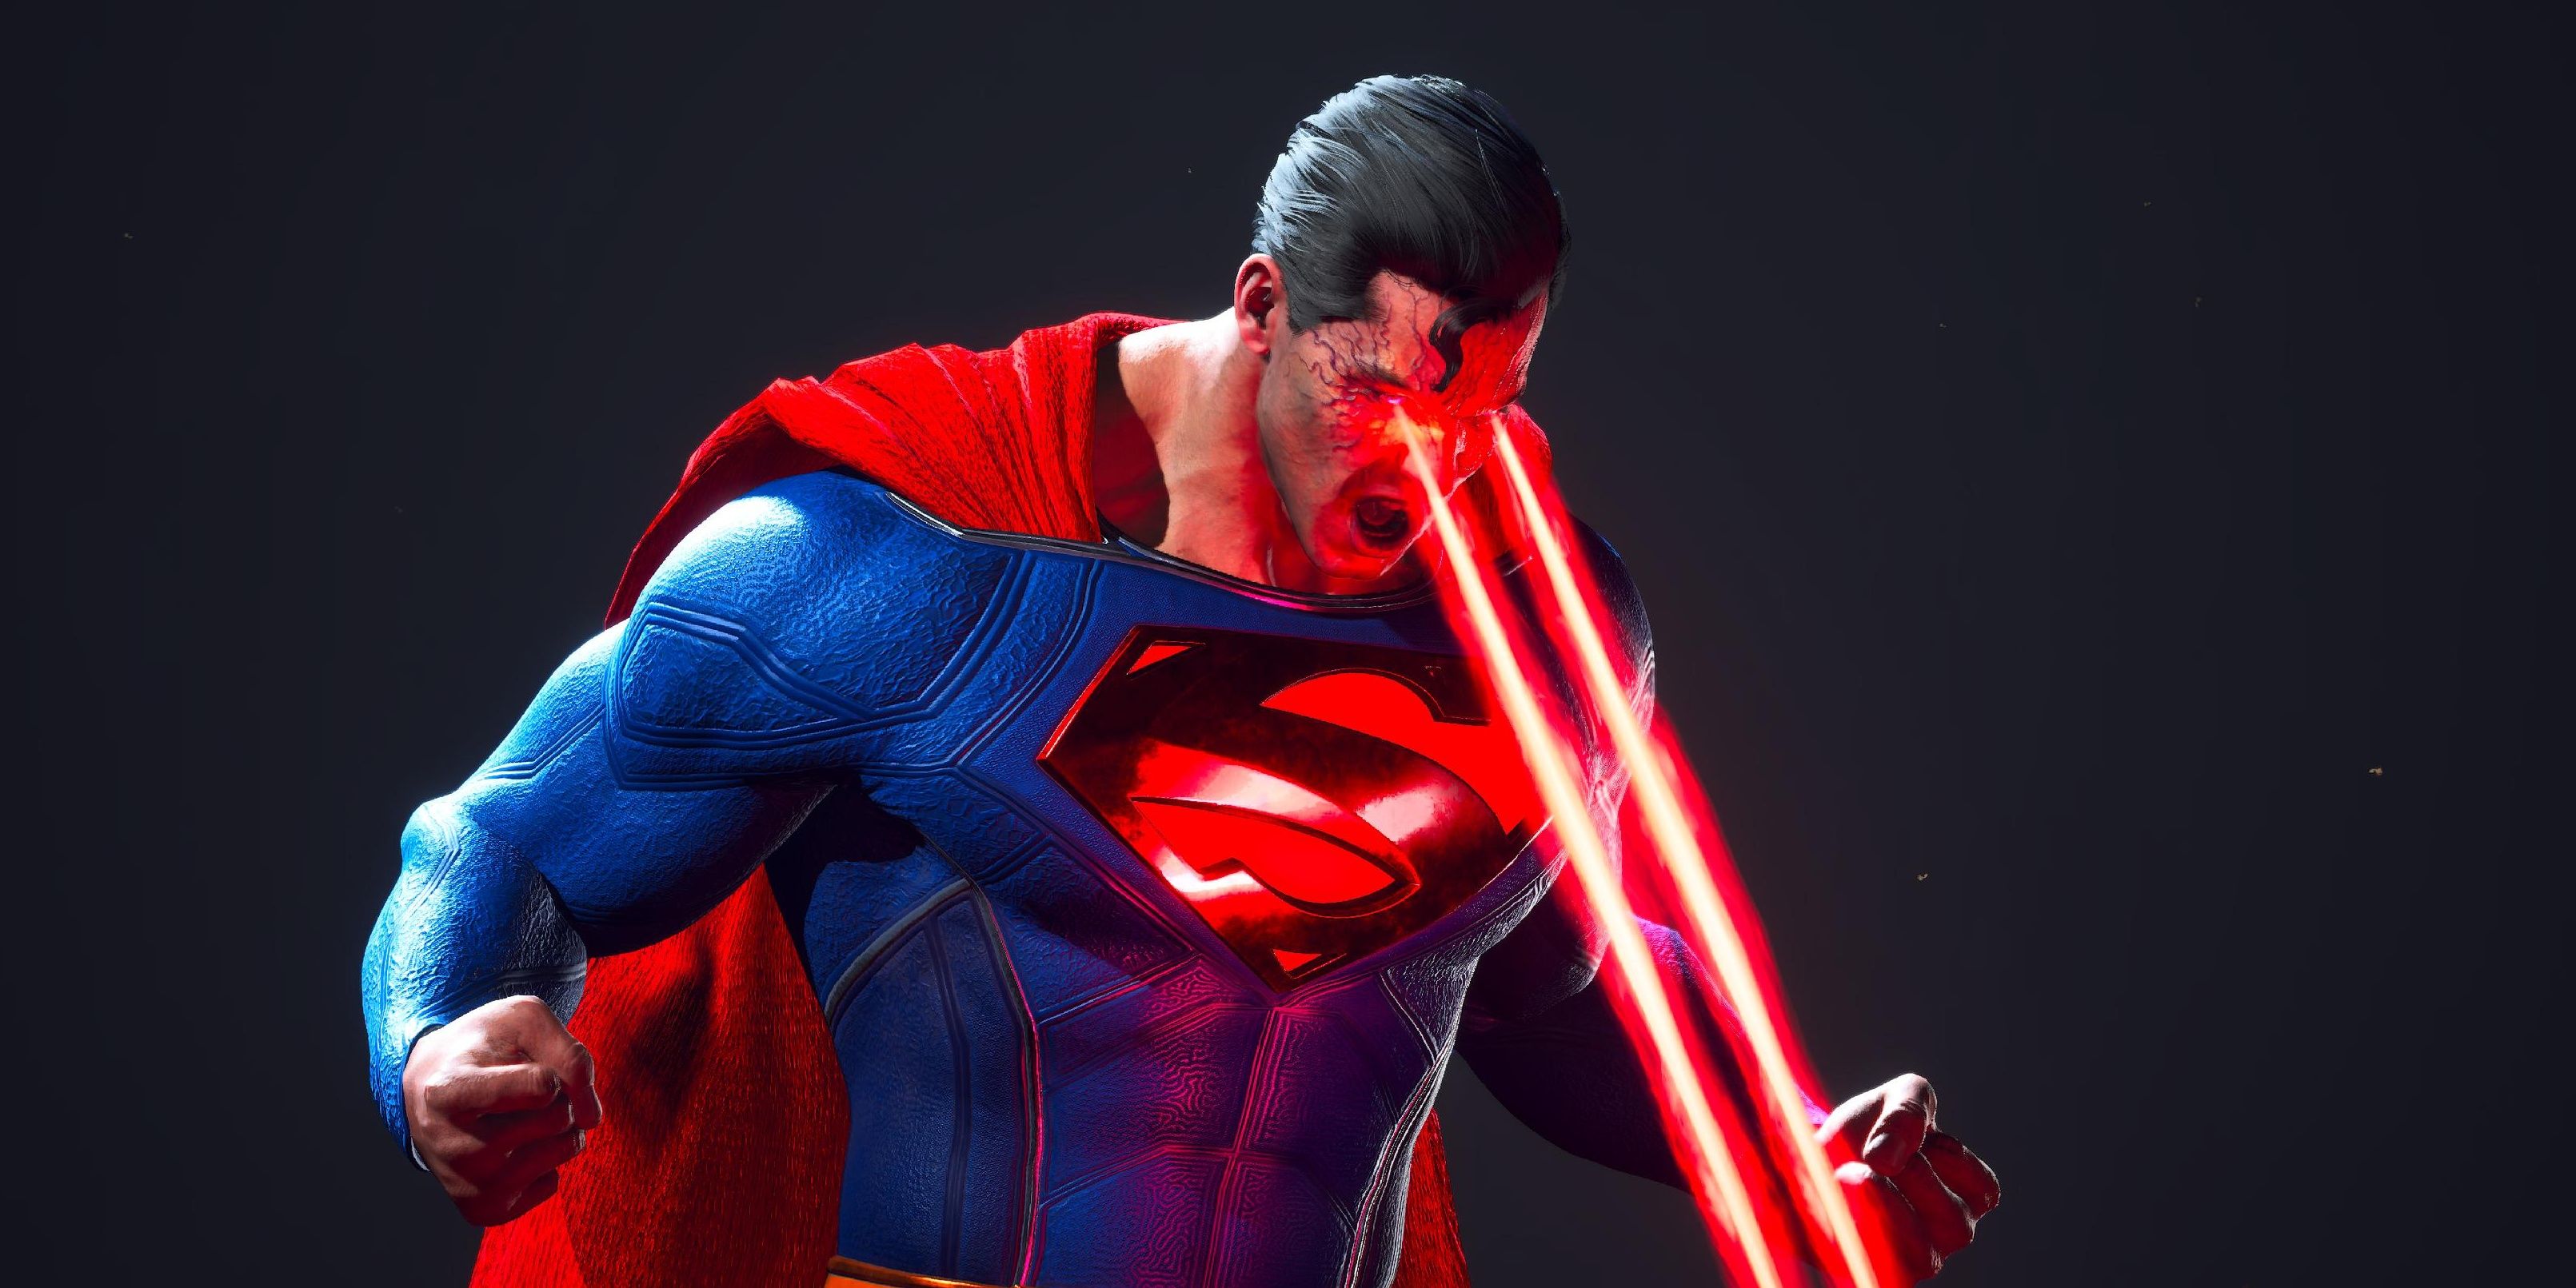 evil superman using his heat vision